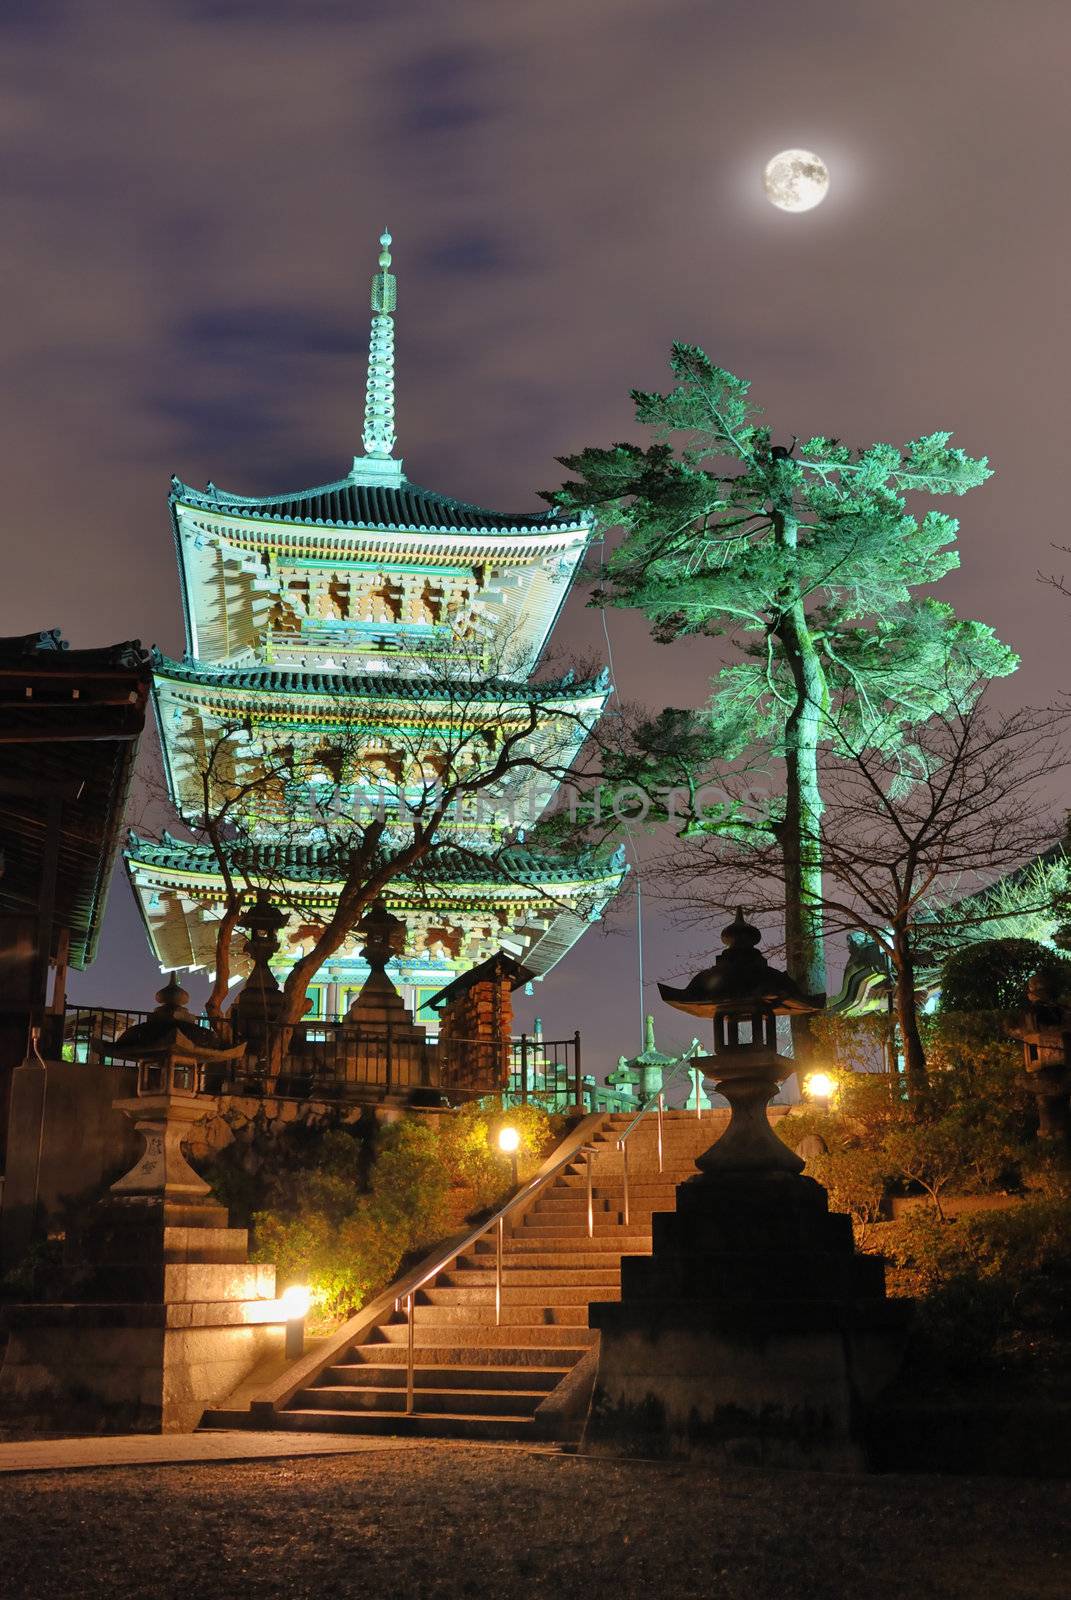 Kiyomizudera pagoda in Kyoto by night under moonlight and city illumination with entrance stairs